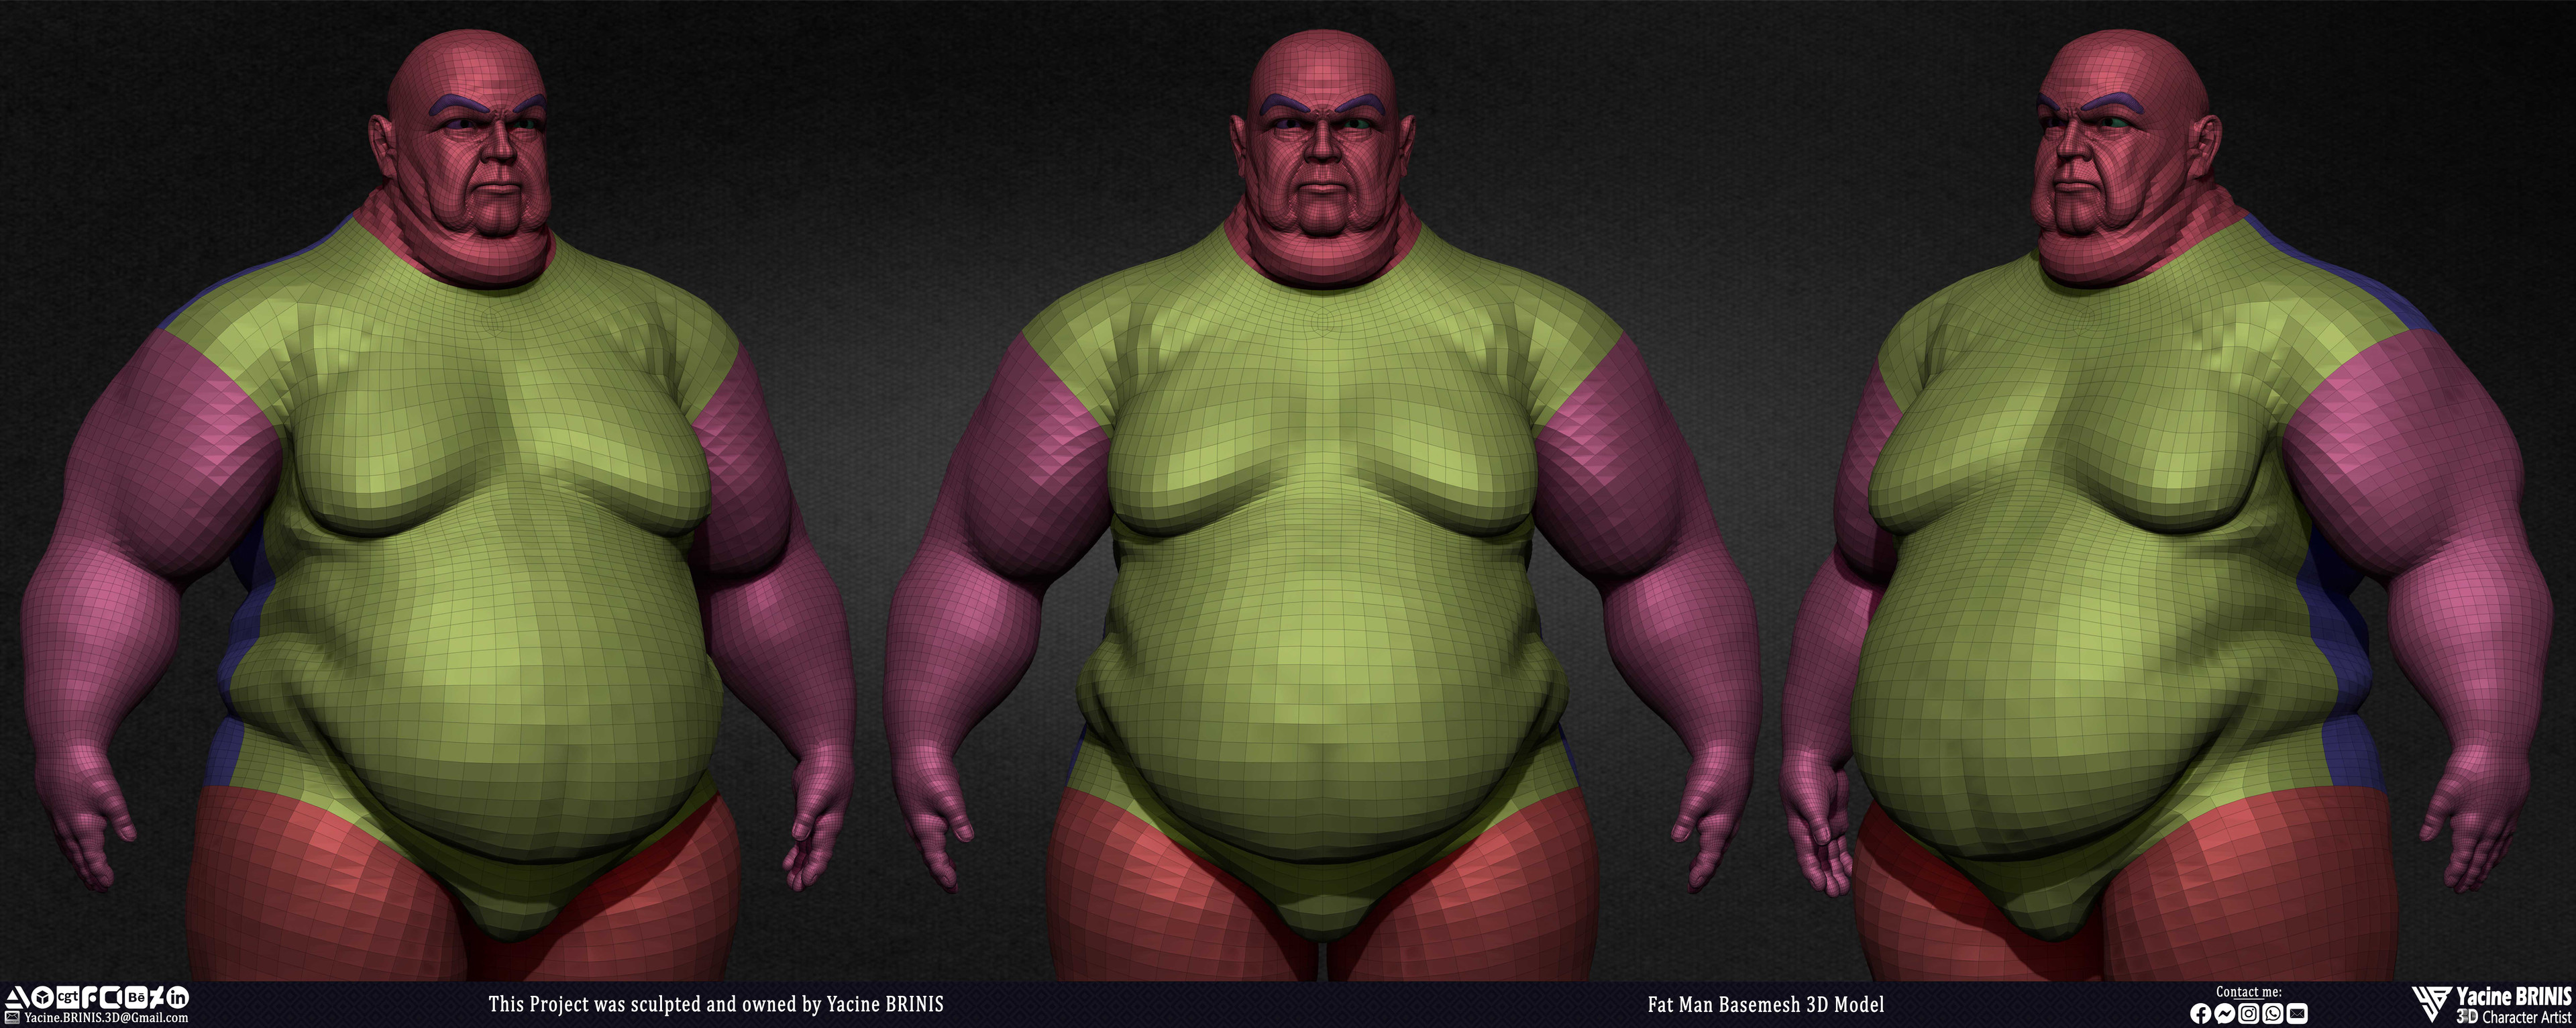 Fat man Basemesh 3D Model sculpted by Yacine BRINIS 007